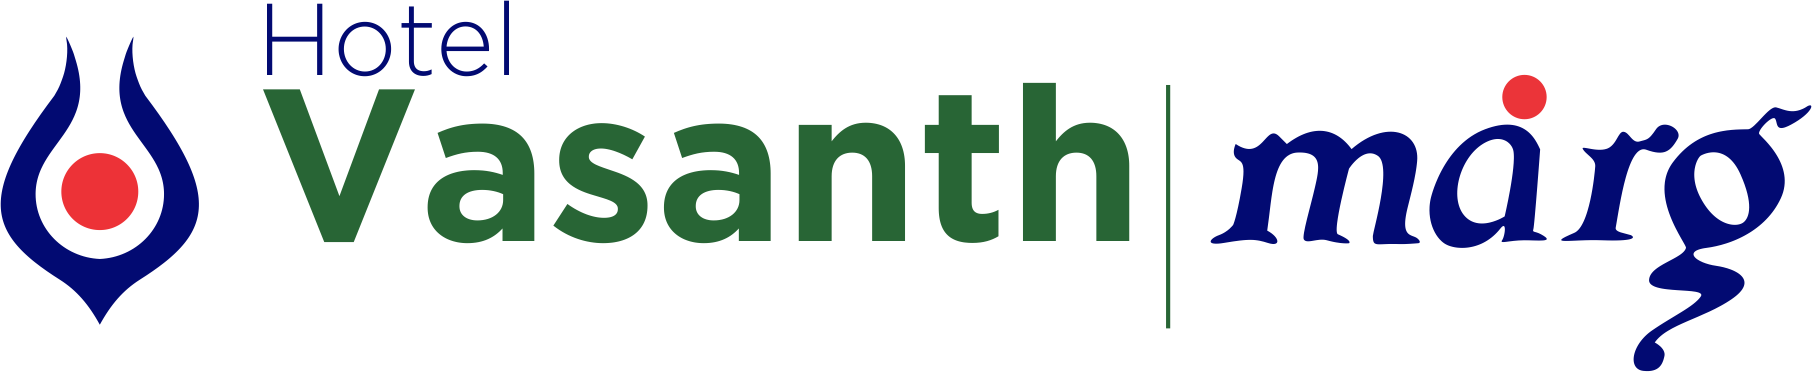 Hotel Vasanth Marg - Logo